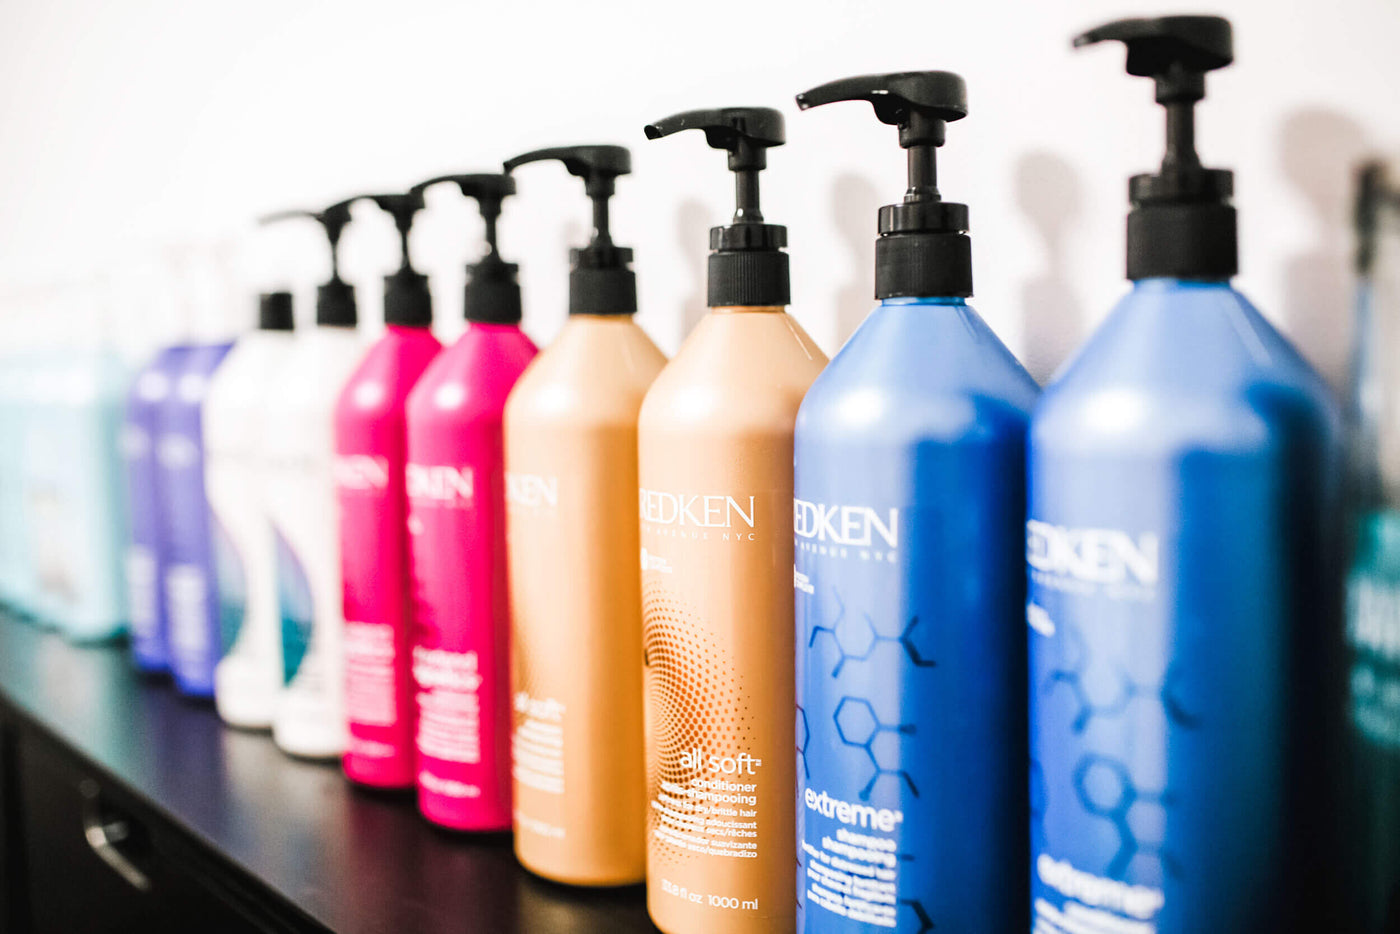 Redken: A Scientifically-Advanced Hair Care Brand